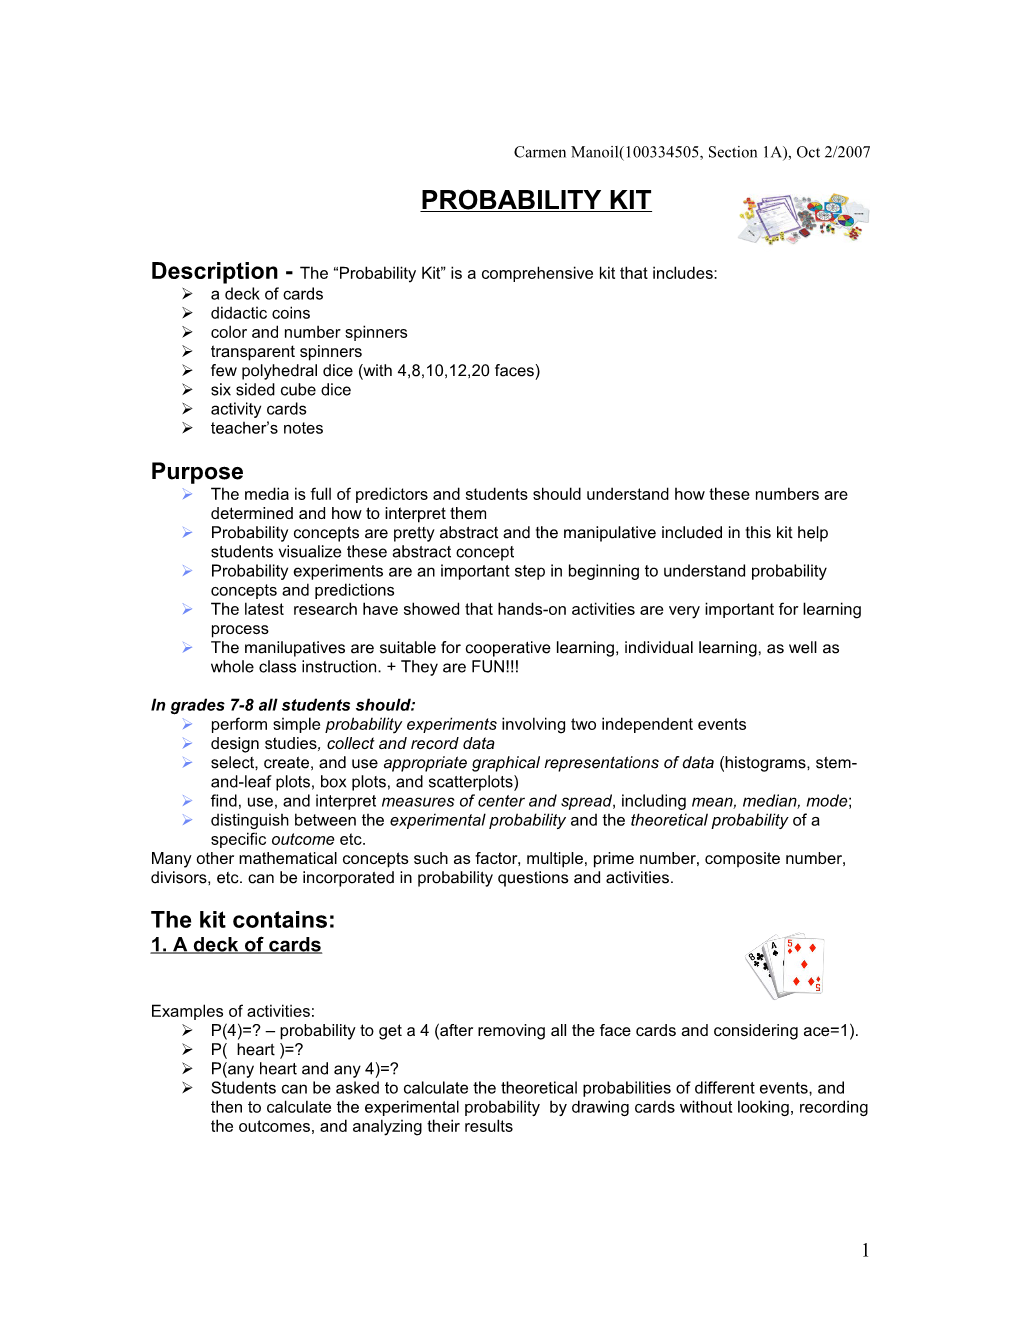 Description - the Probability Kit Is a Comprehensive Kit That Includes